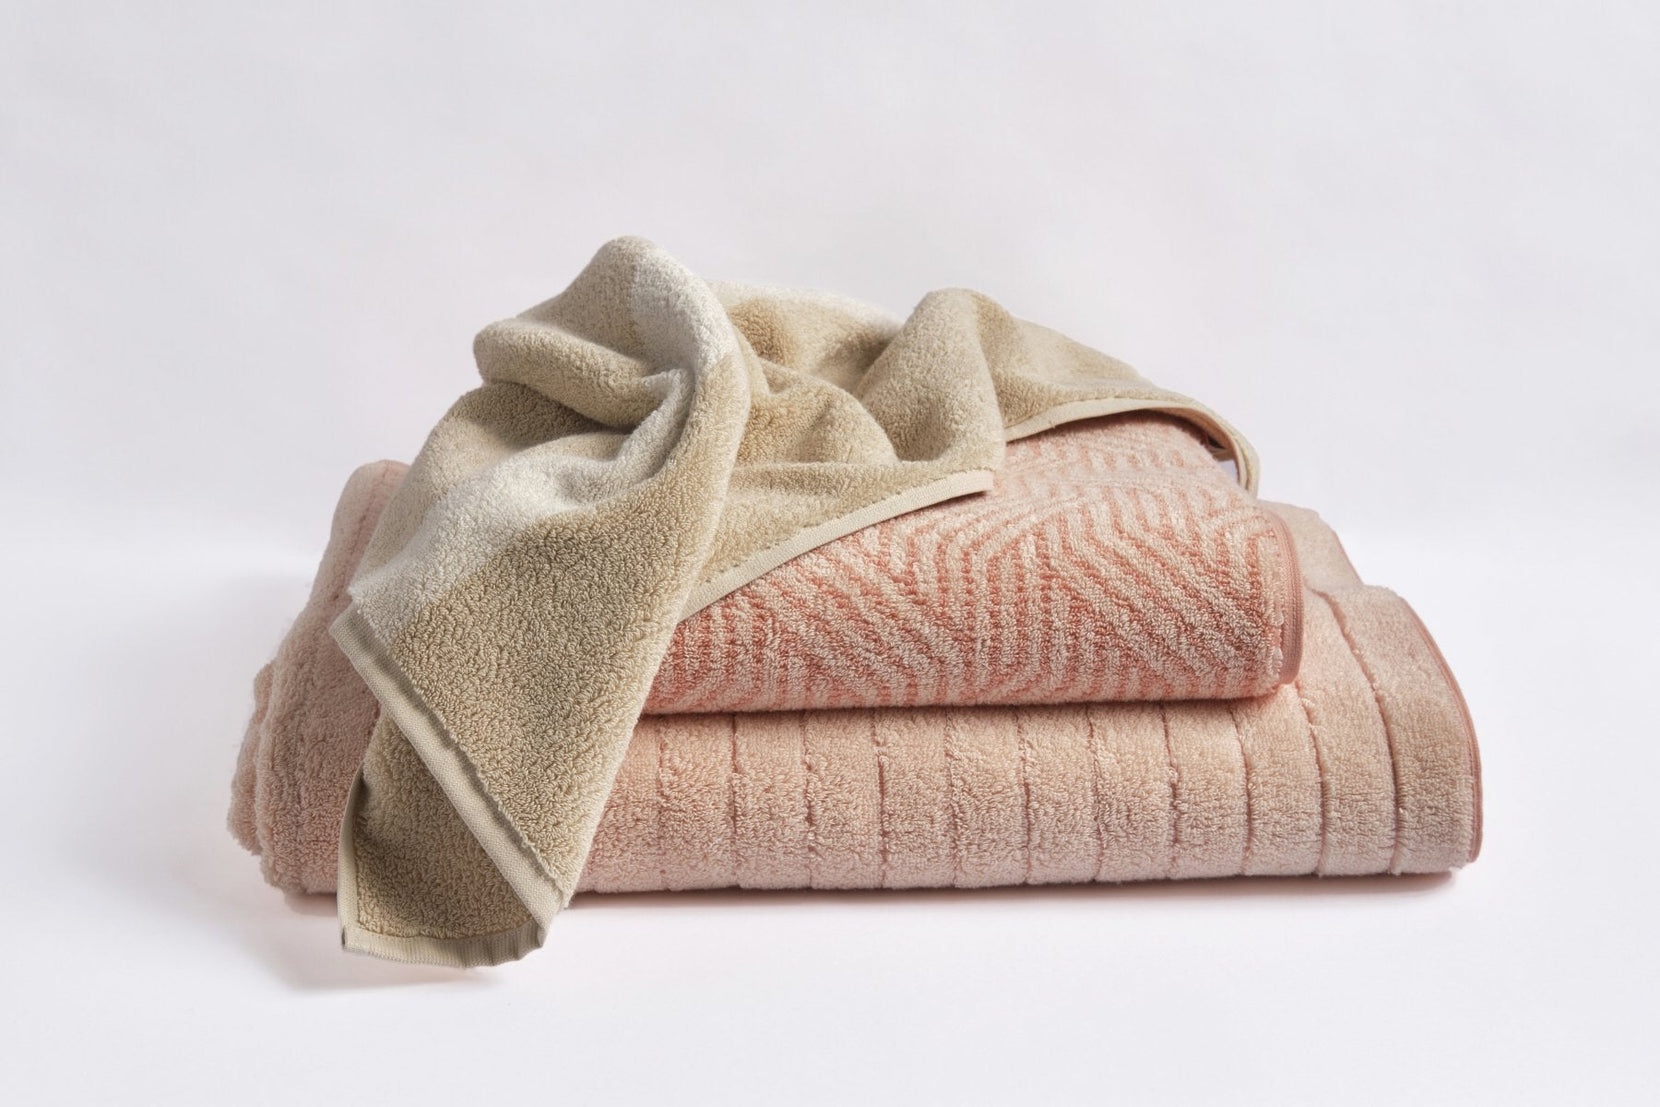 Bath Towel Set, 4-Piece 100% Turkish Cotton Bath Towels, 27 x 54 in. S